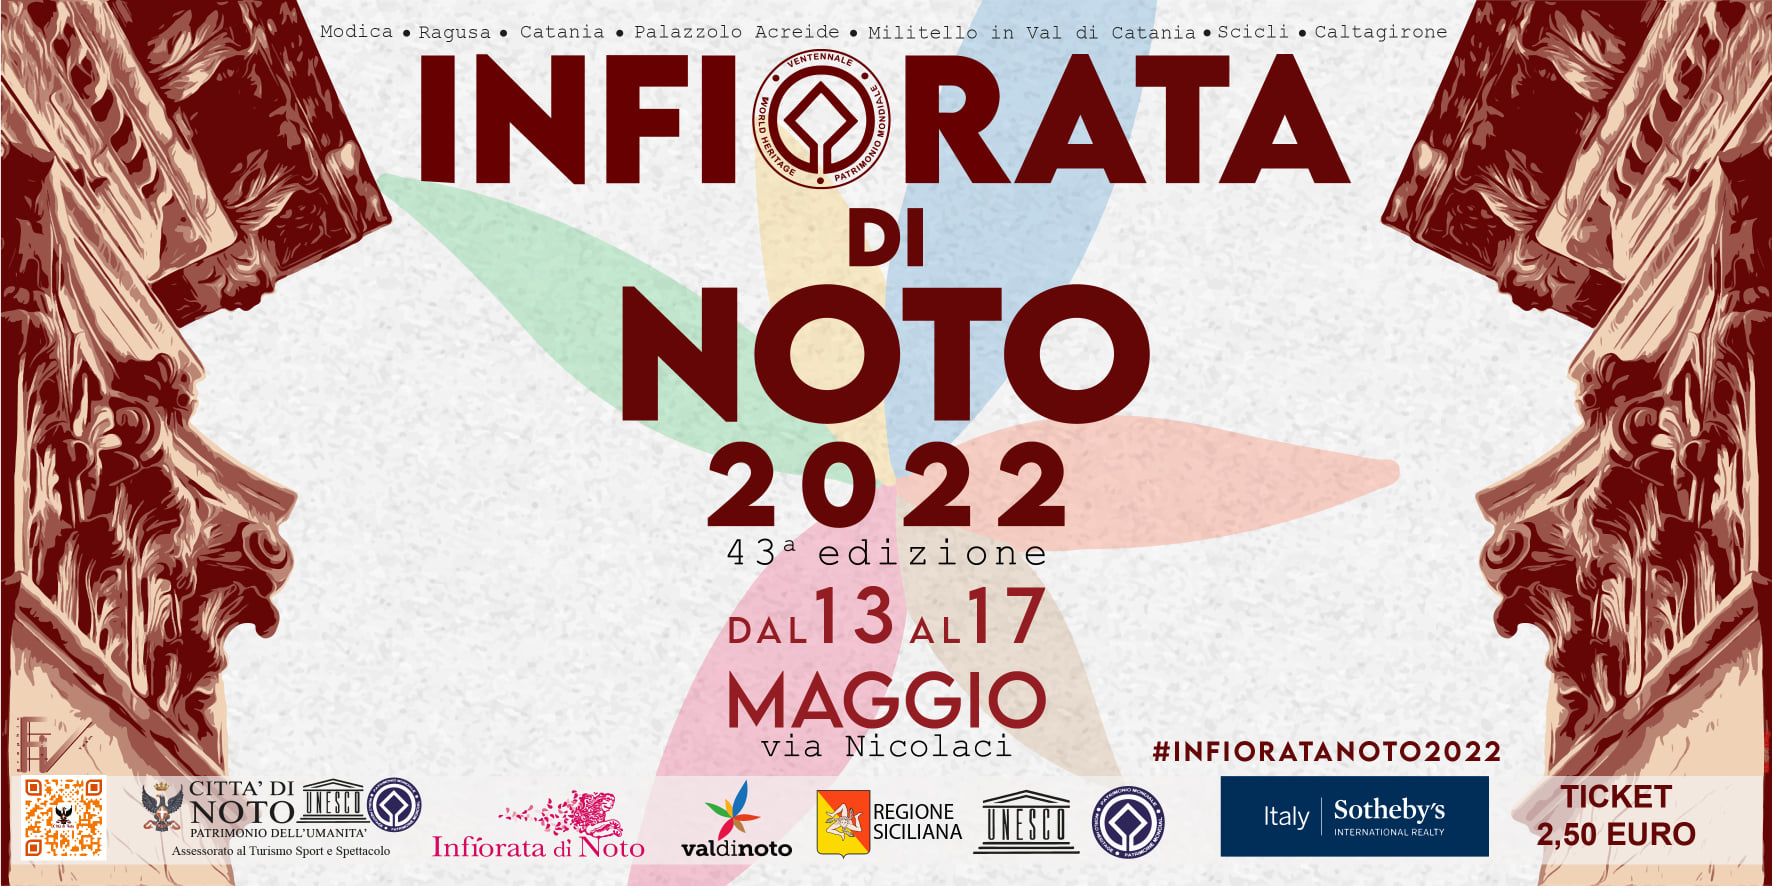 Infiorata Noto 2022 banner